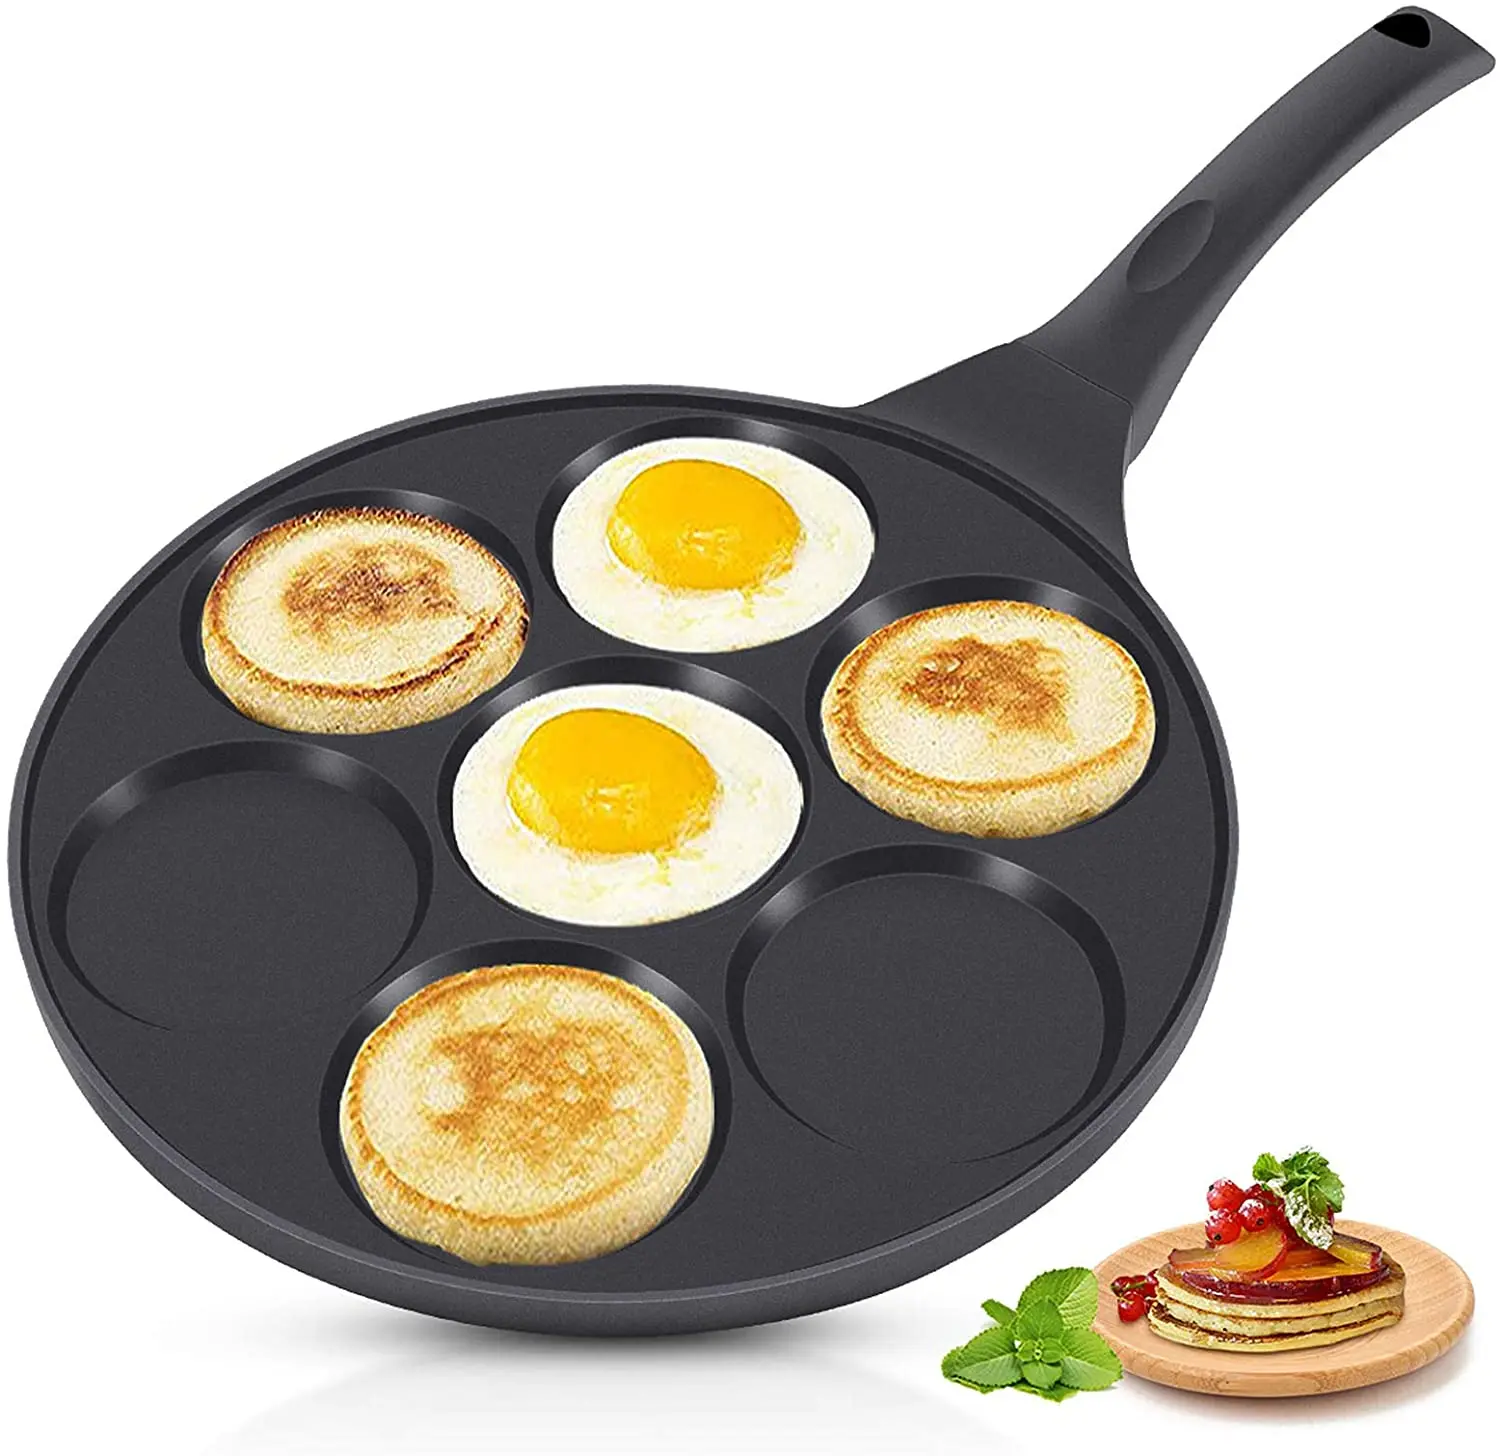 10 Inch Pancake Mold Pan With 7-Cup Animal Mold Blini Pan Breakfast Griddle Egg Frying Pan for Kids,100% PFOA Free Non-stick Coating Pancake Maker Pan Nonstick Griddle 